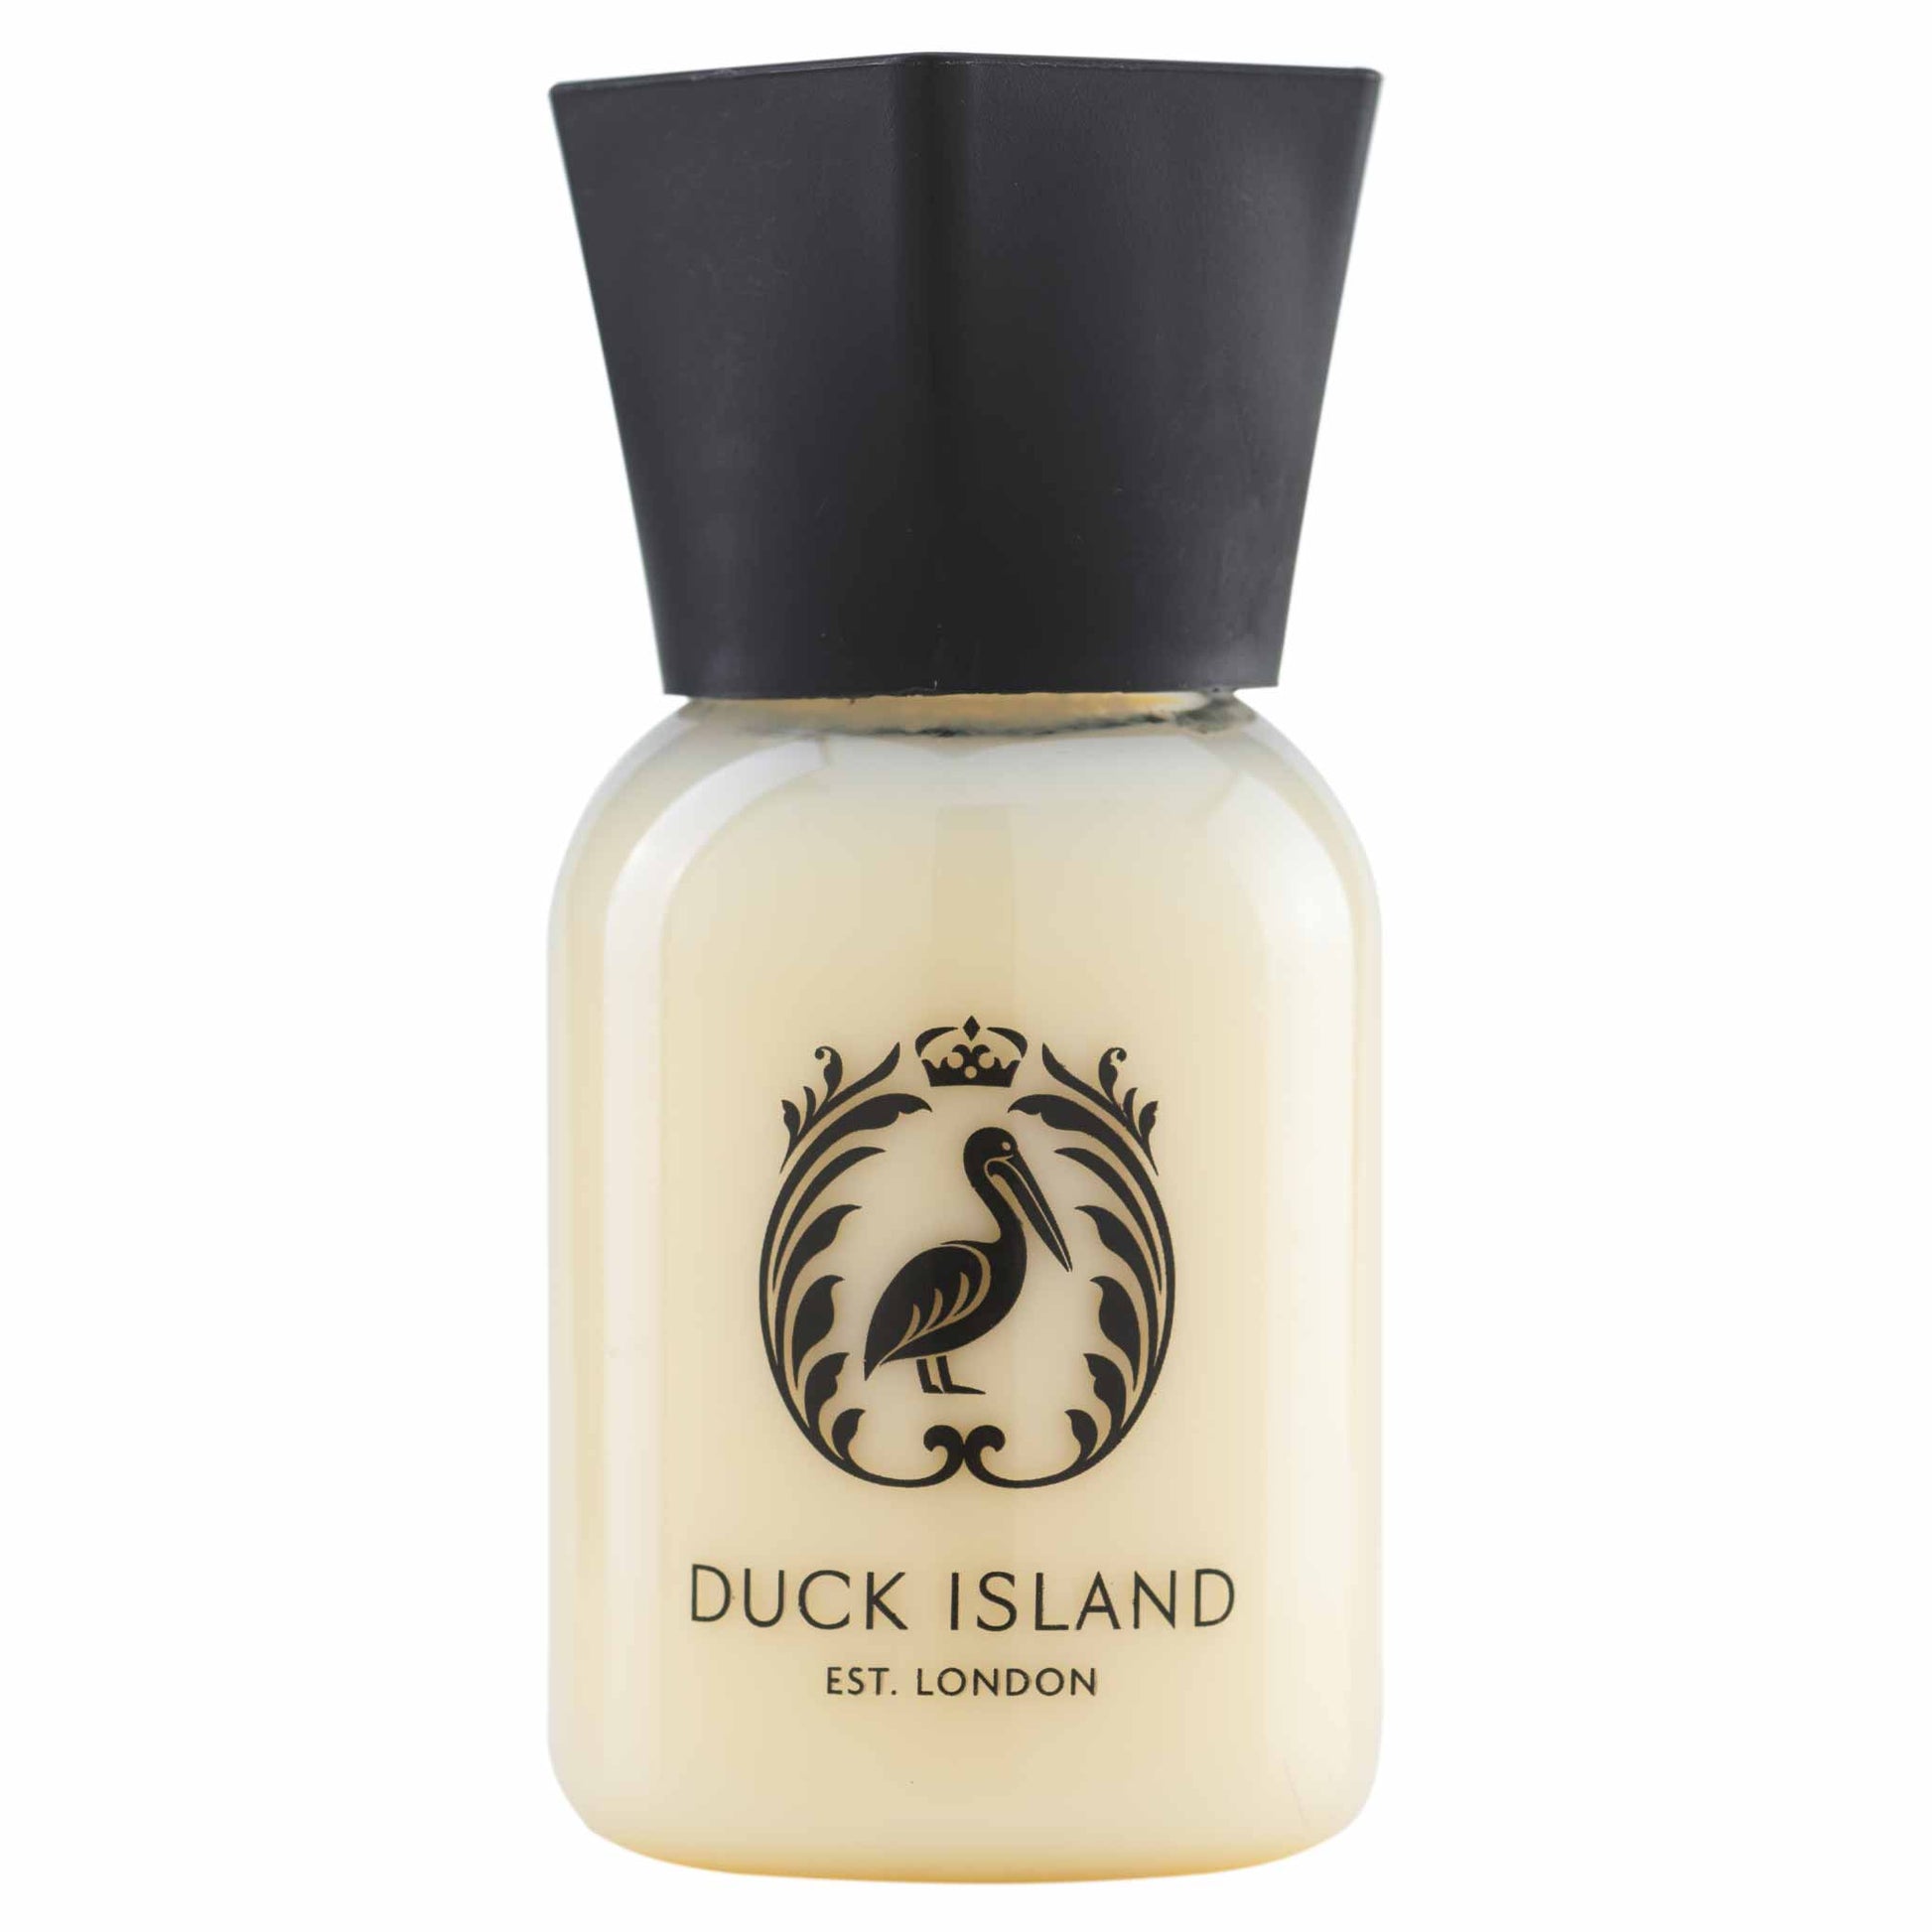 Duck Island Classic body lotion in miniature 30ml bottle